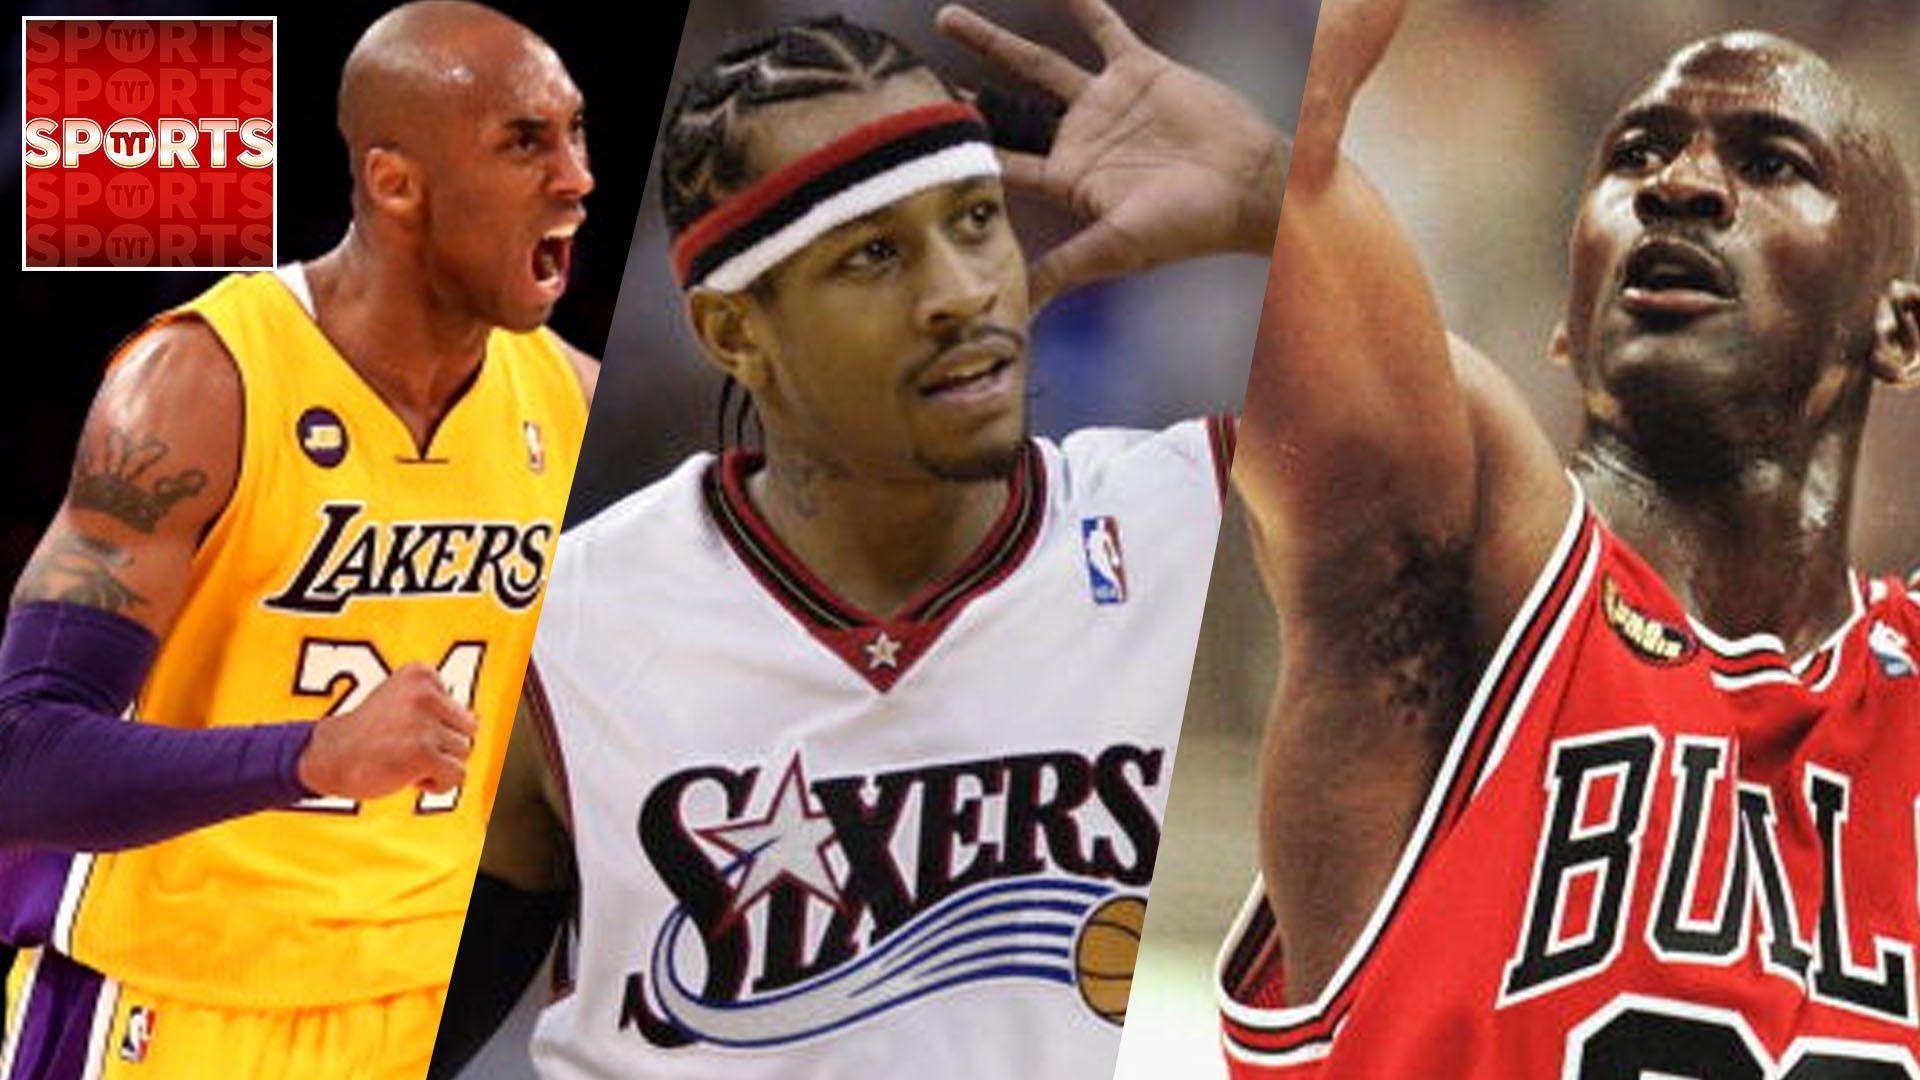 NBA 2k16 What If 1996 Draft vs. 1984 Draft Kobe, Allen Iverson vs